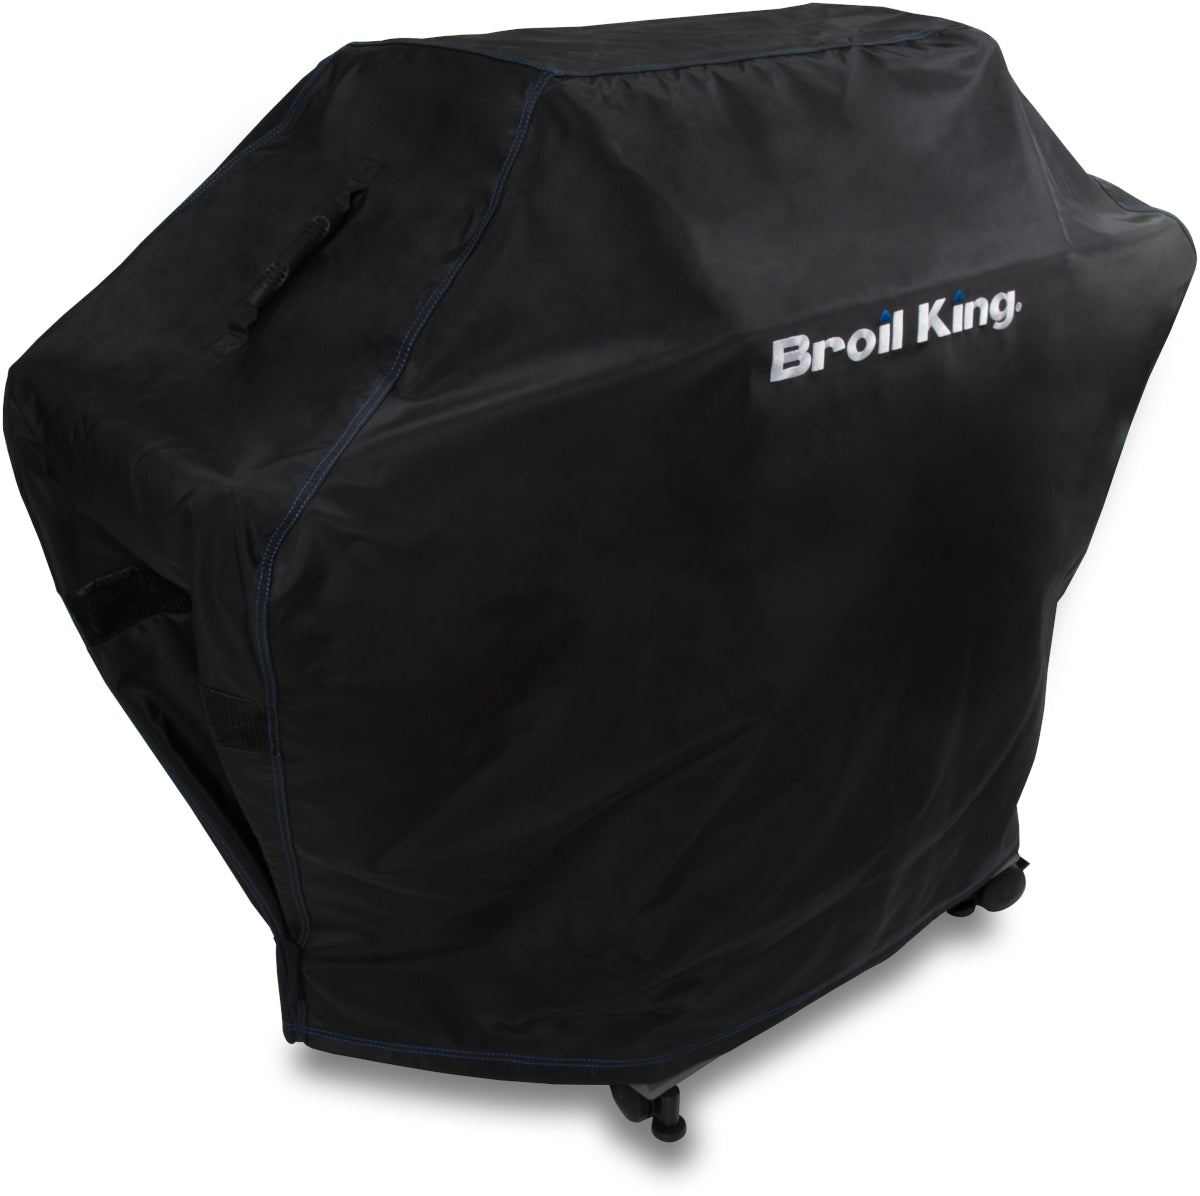 Broil King Premium Cover - Fits Regal S590 Pro & Regal 590 Black.